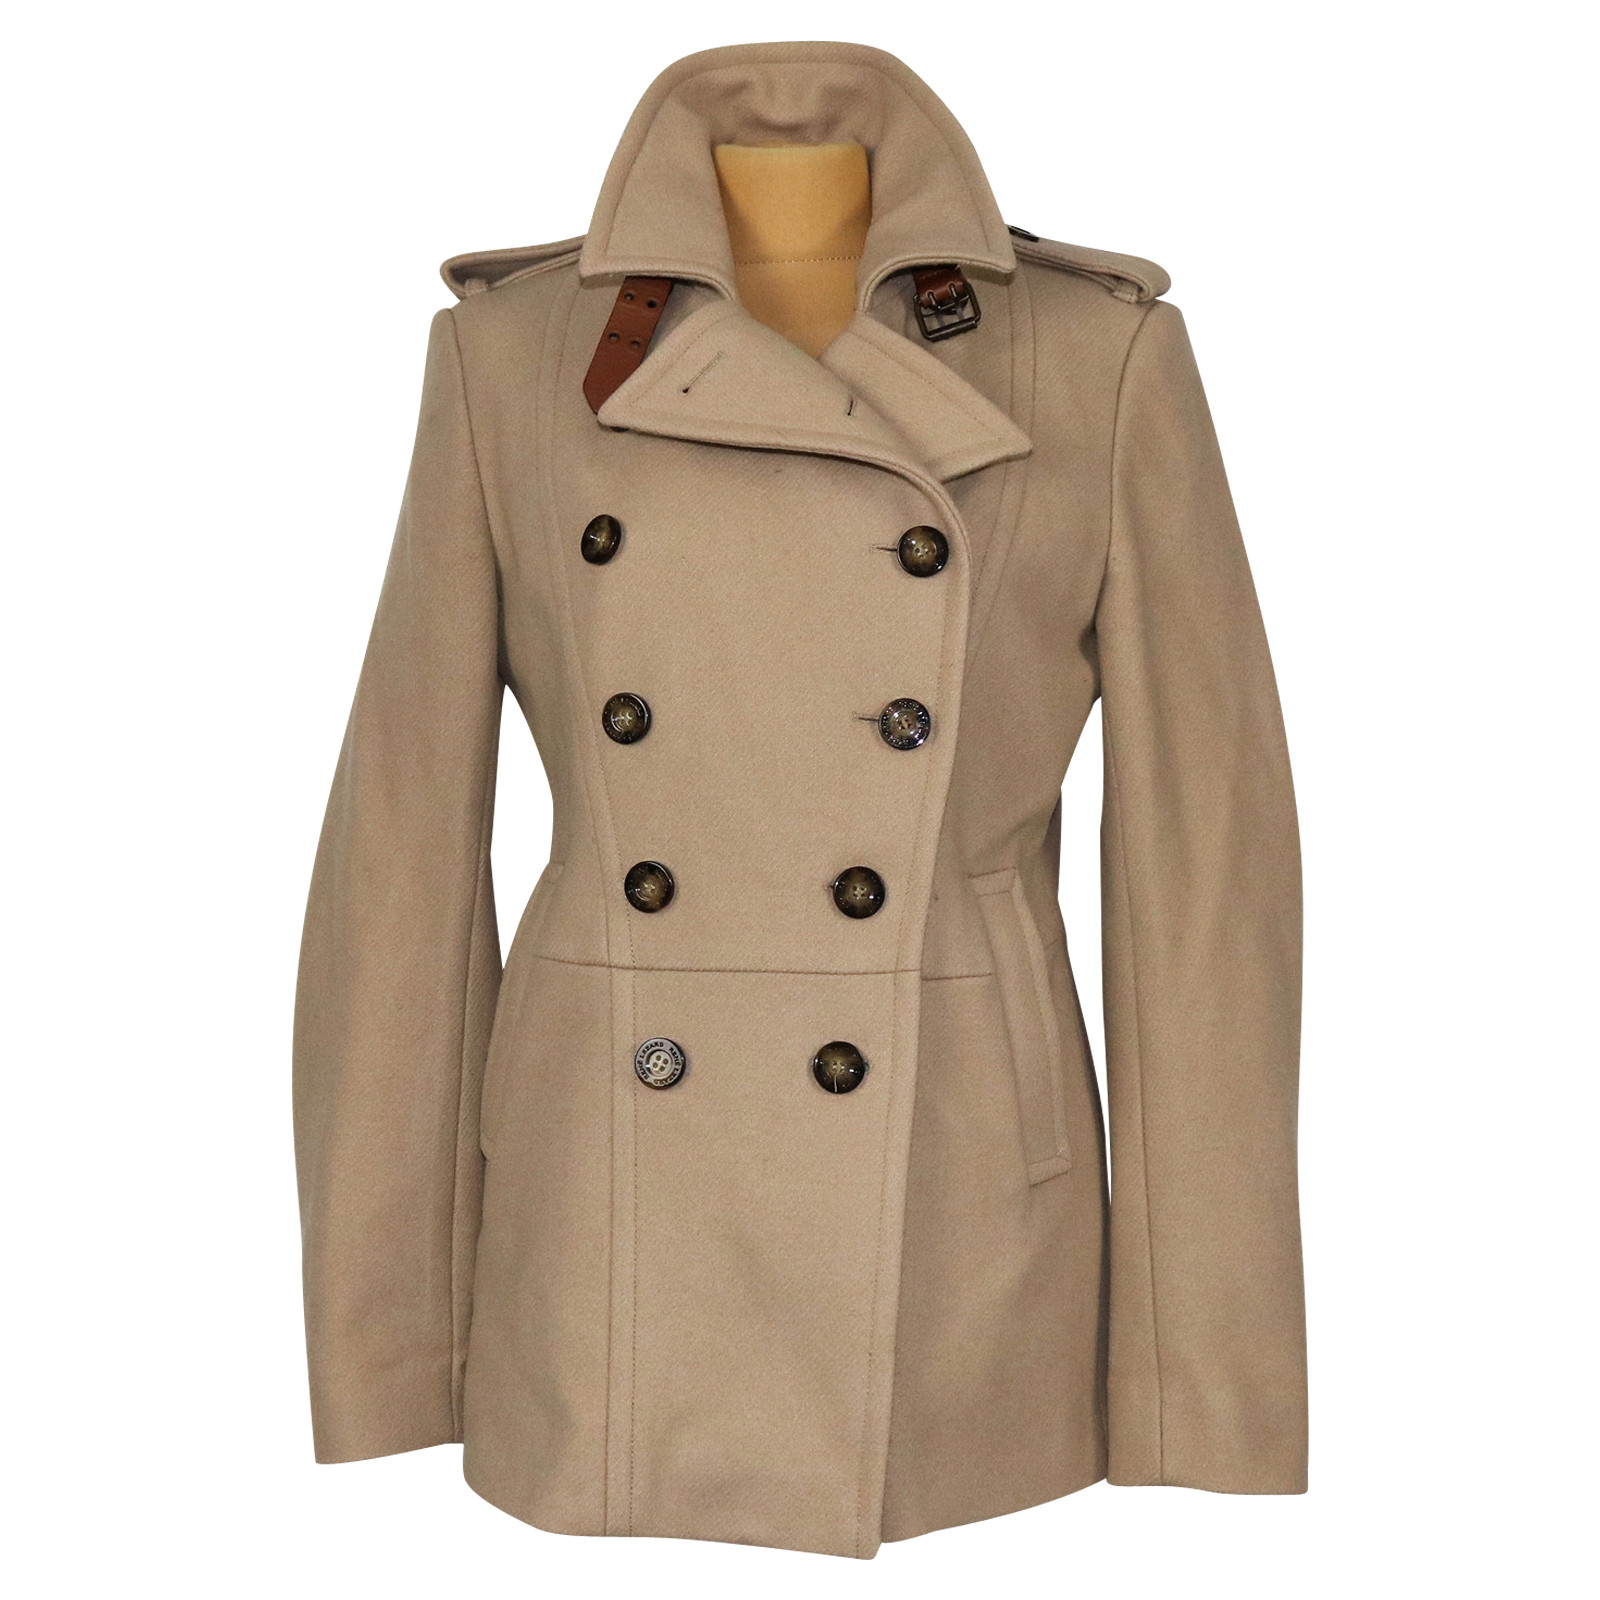 RENÉ LEZARD Women's Jacke/Mantel aus Wolle in Braun